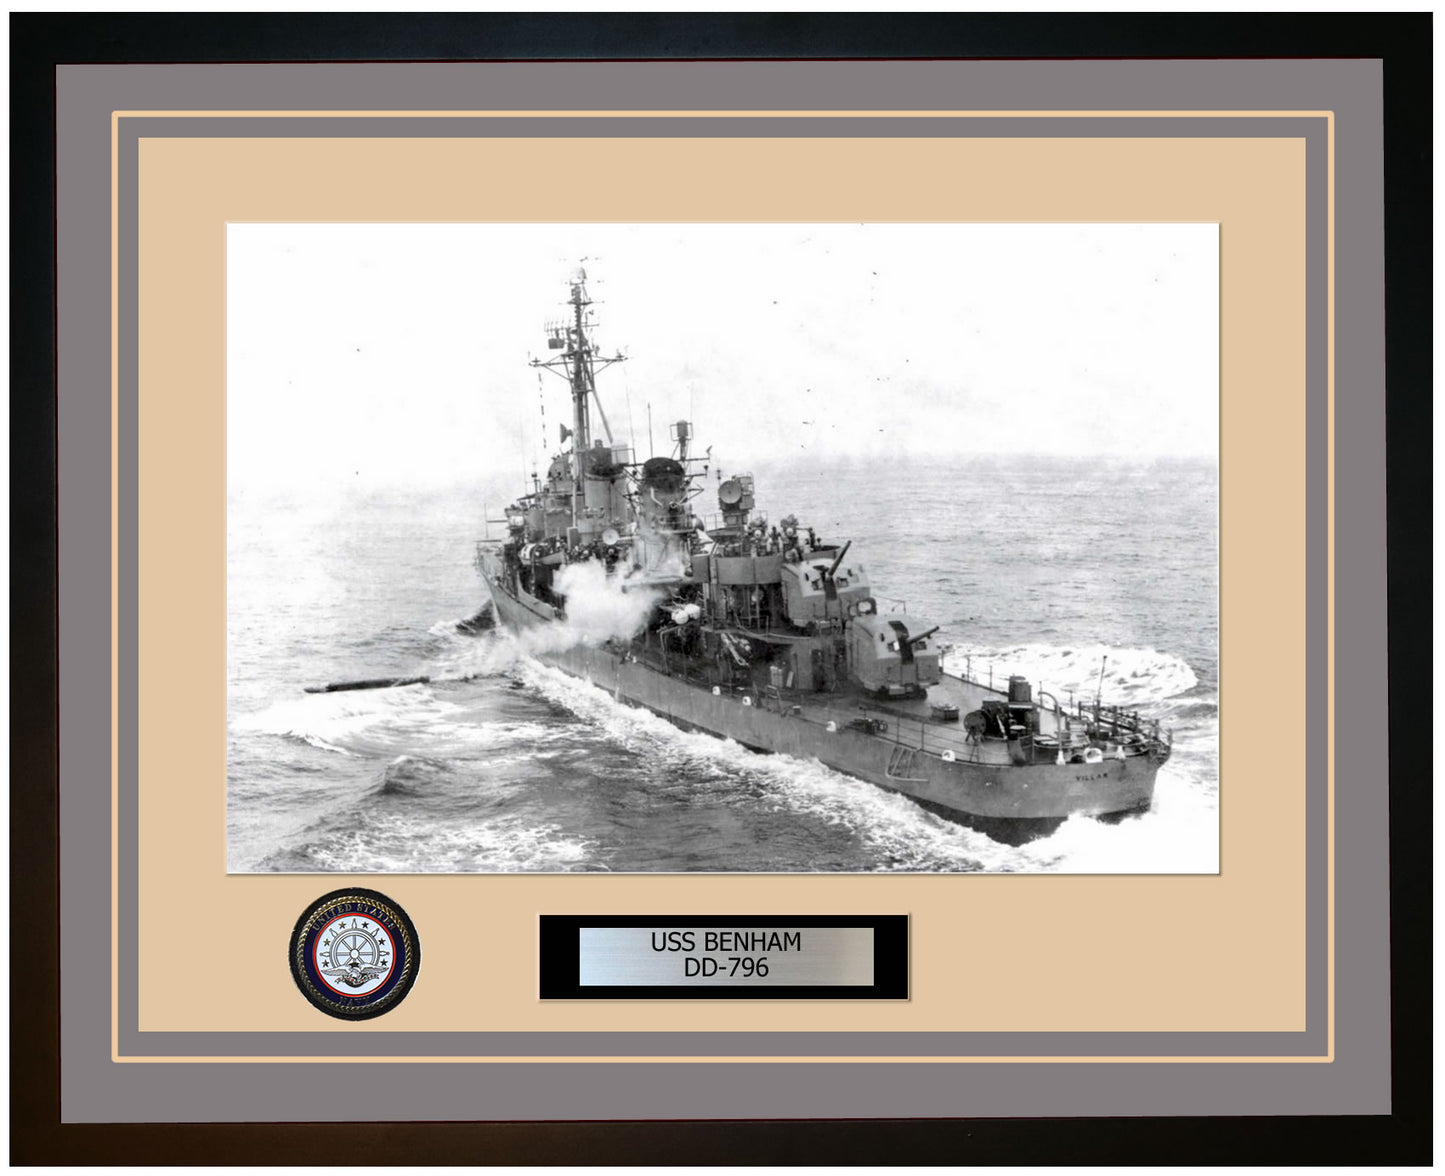 USS BENHAM DD-796 Framed Navy Ship Photo Grey